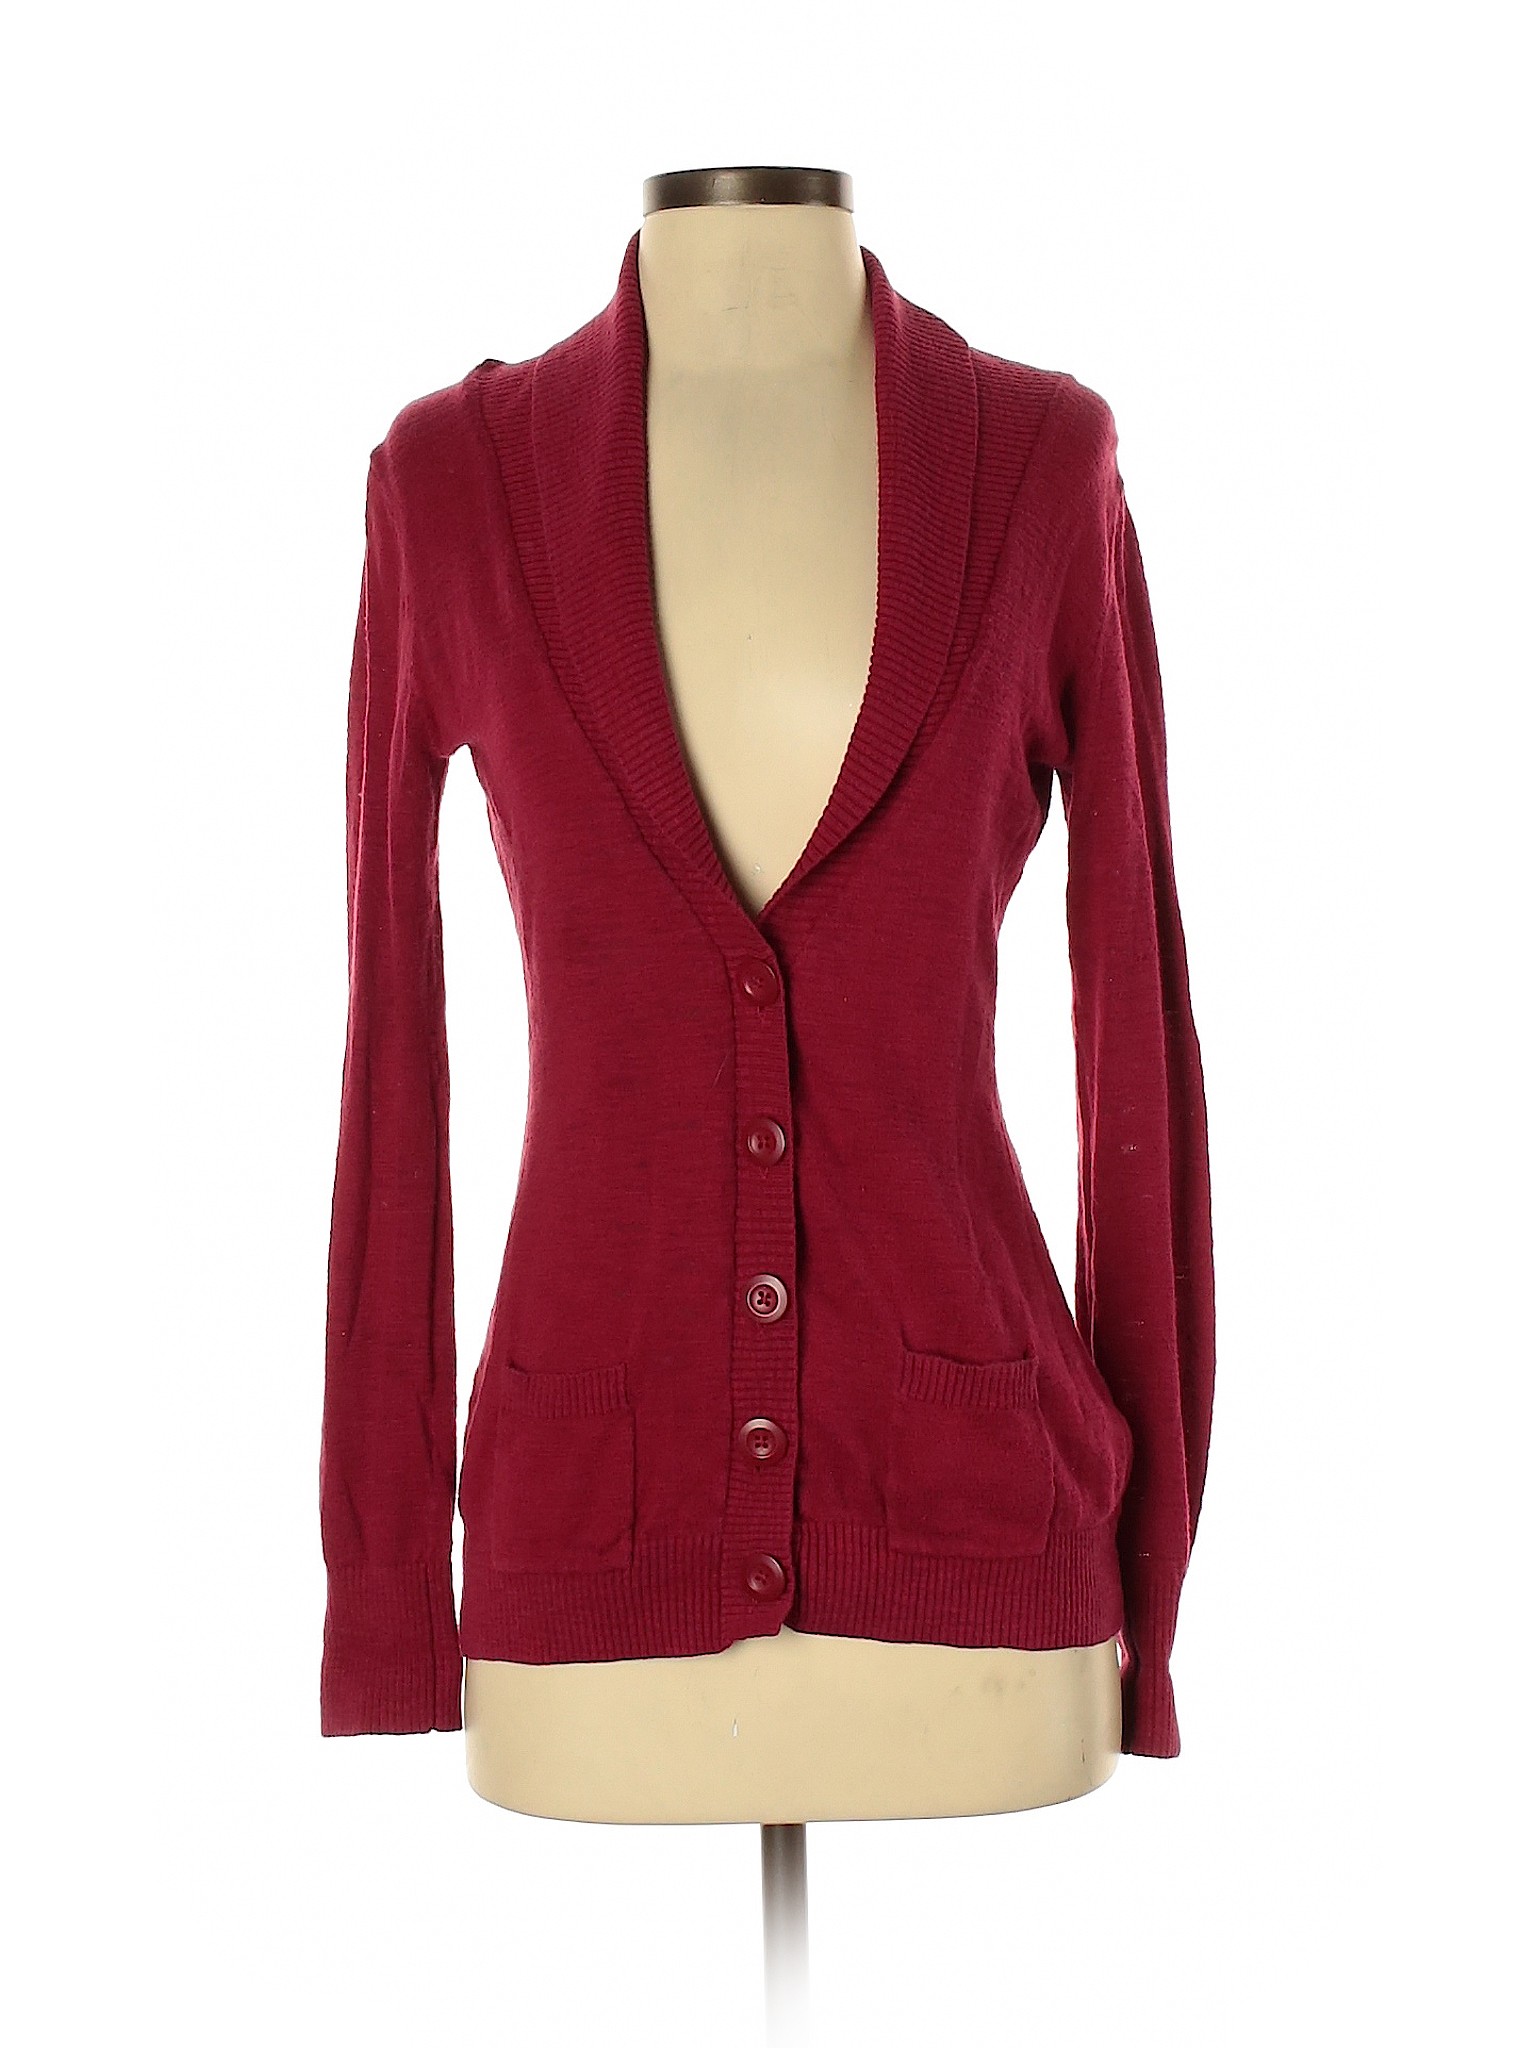 Mossimo Supply Co. Women Red Cardigan S | eBay